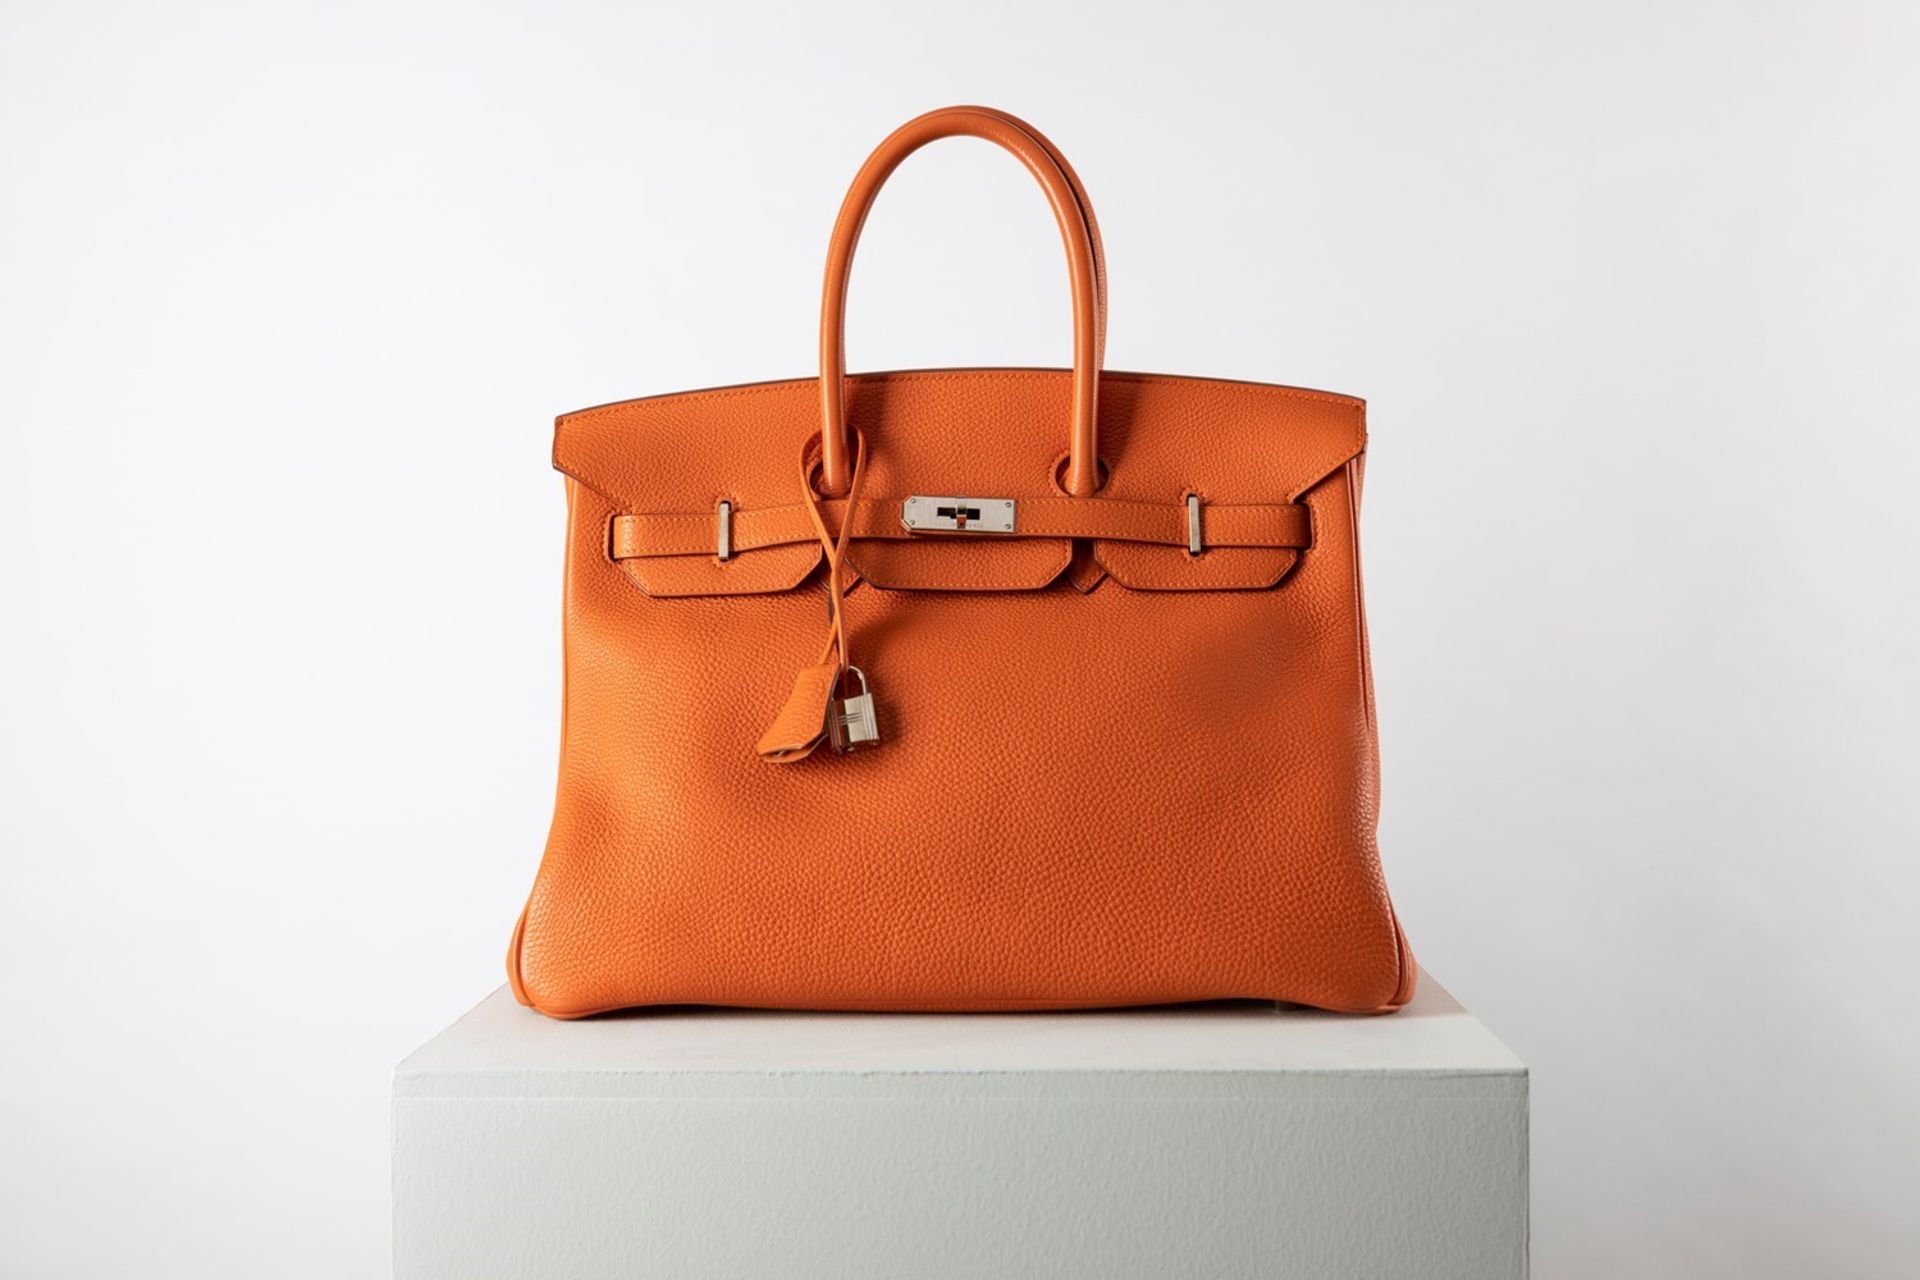 Hermès - Birkin Bag 35 cm - Birkin Bag 35 cm - Orange togo leather 35 cm Birkin [...]